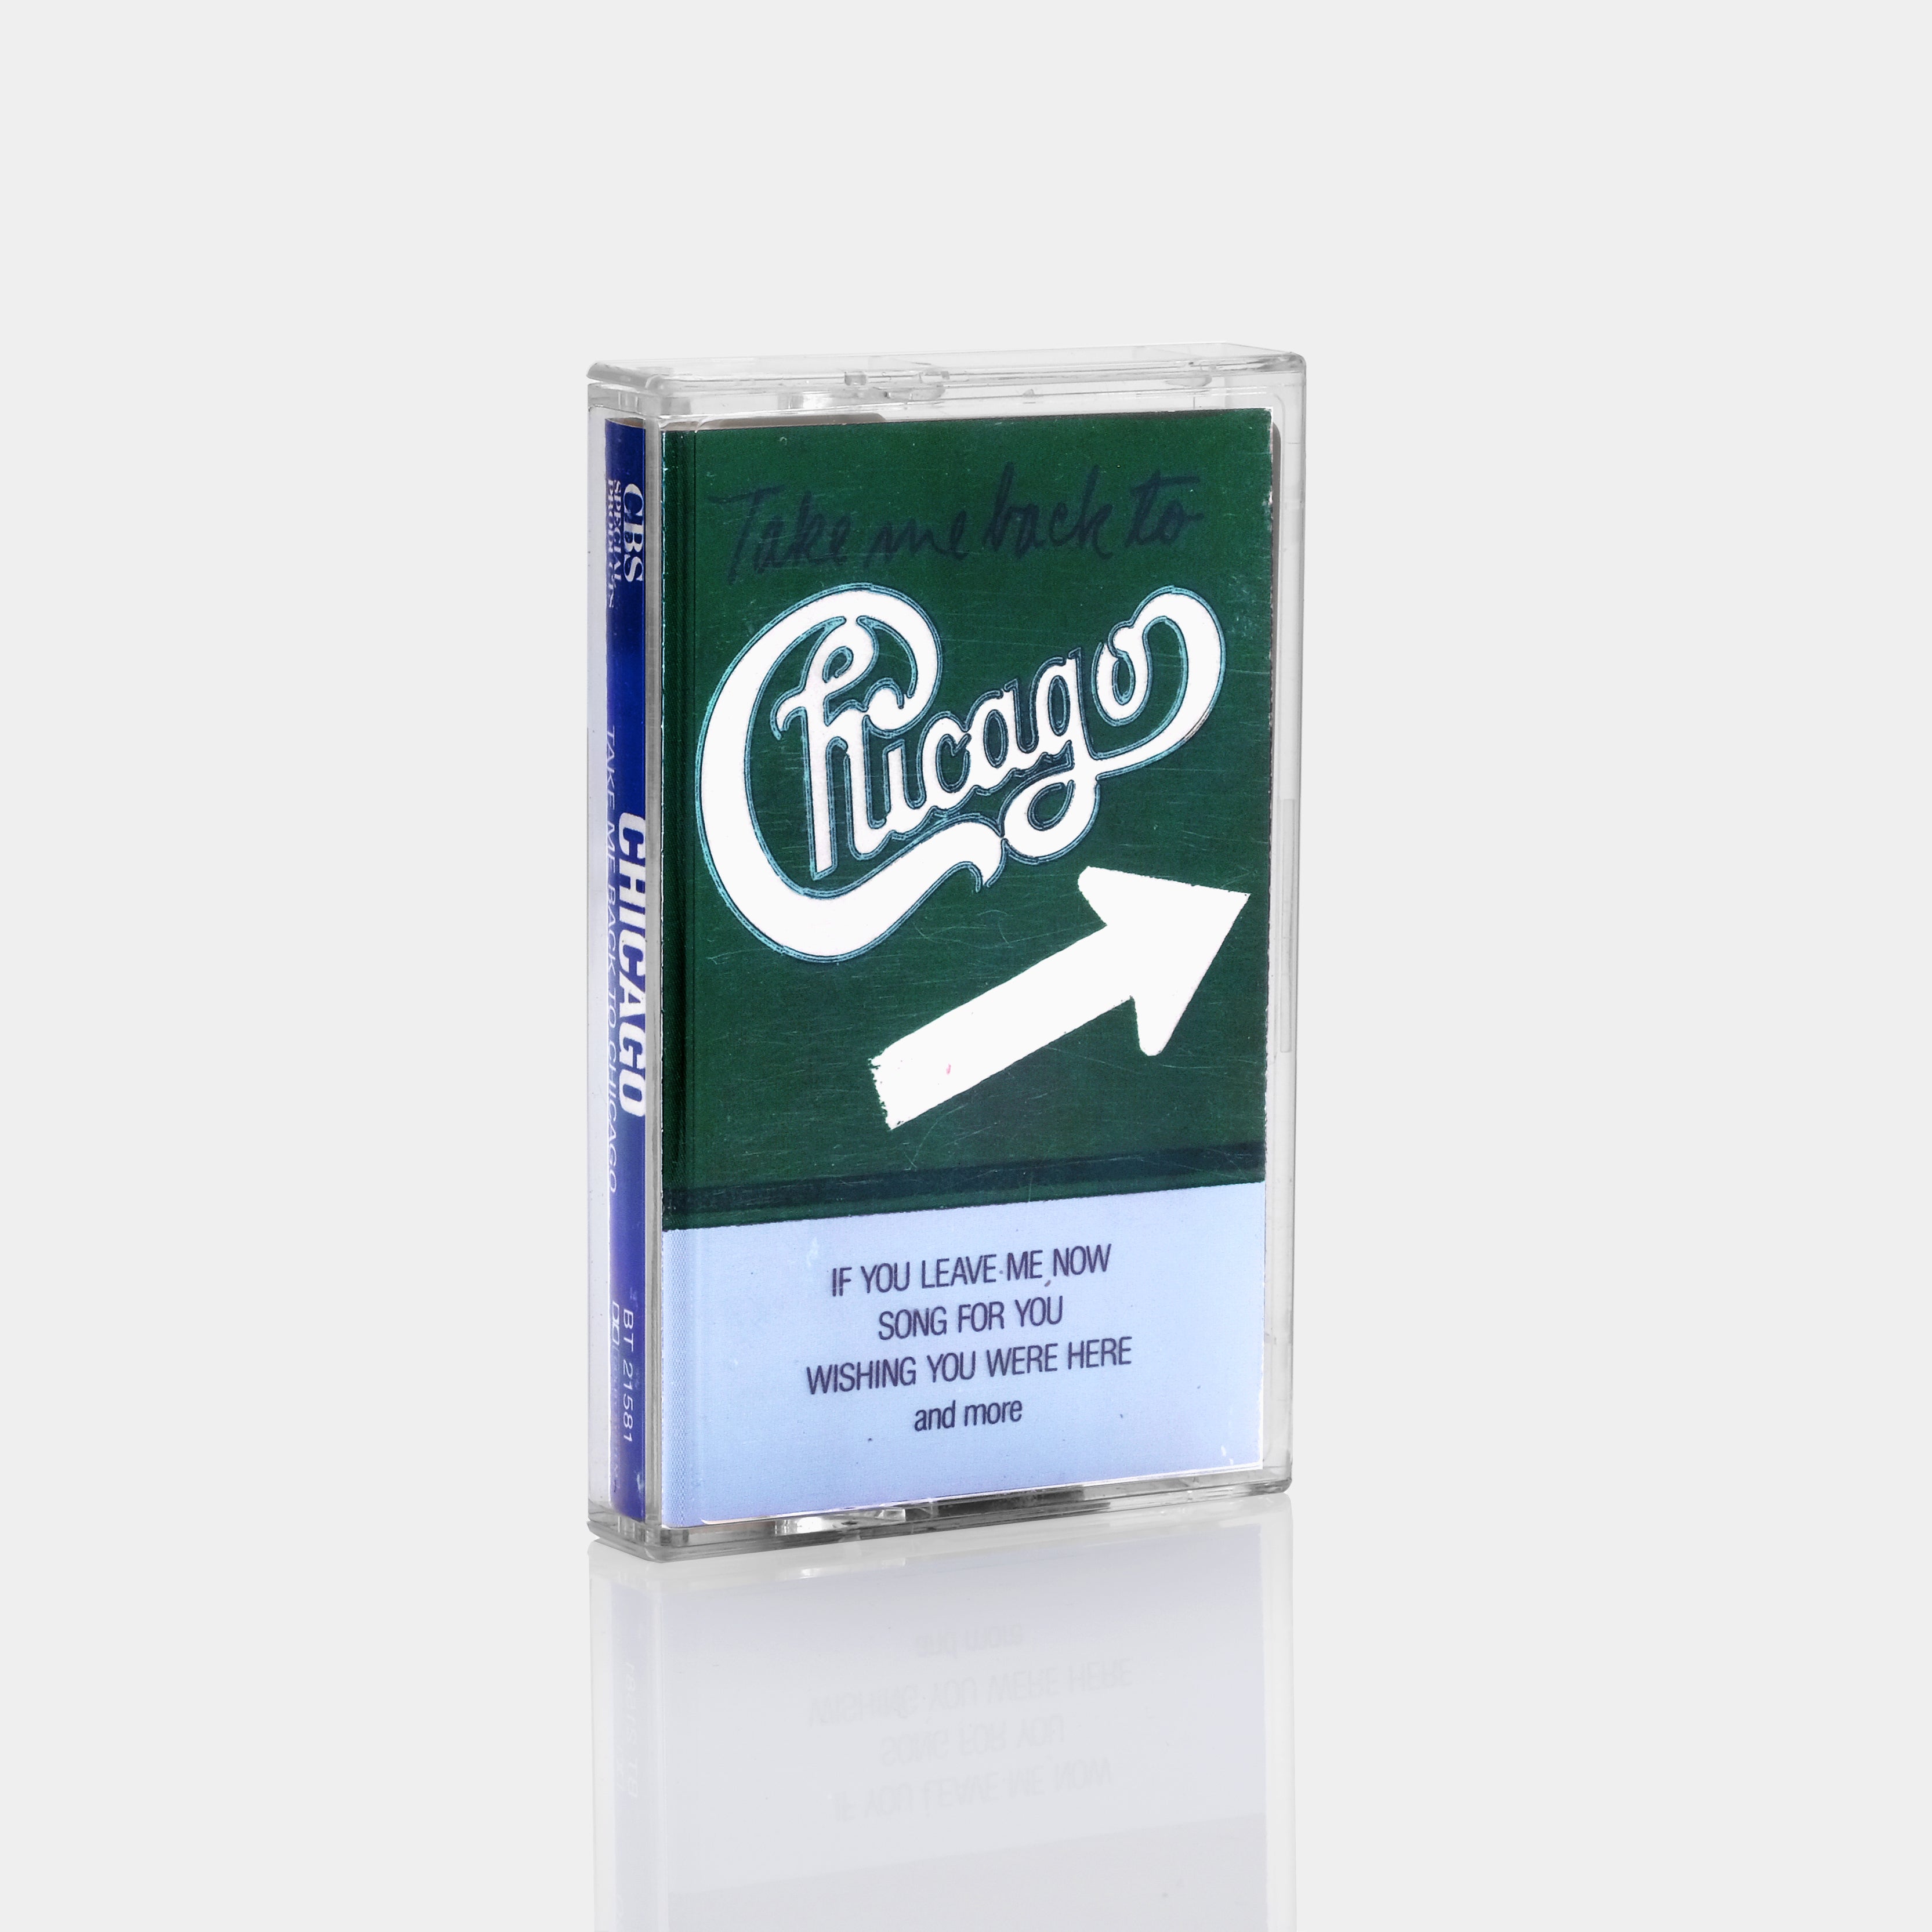 Chicago - Take Me Back To Chicago Cassette Tape